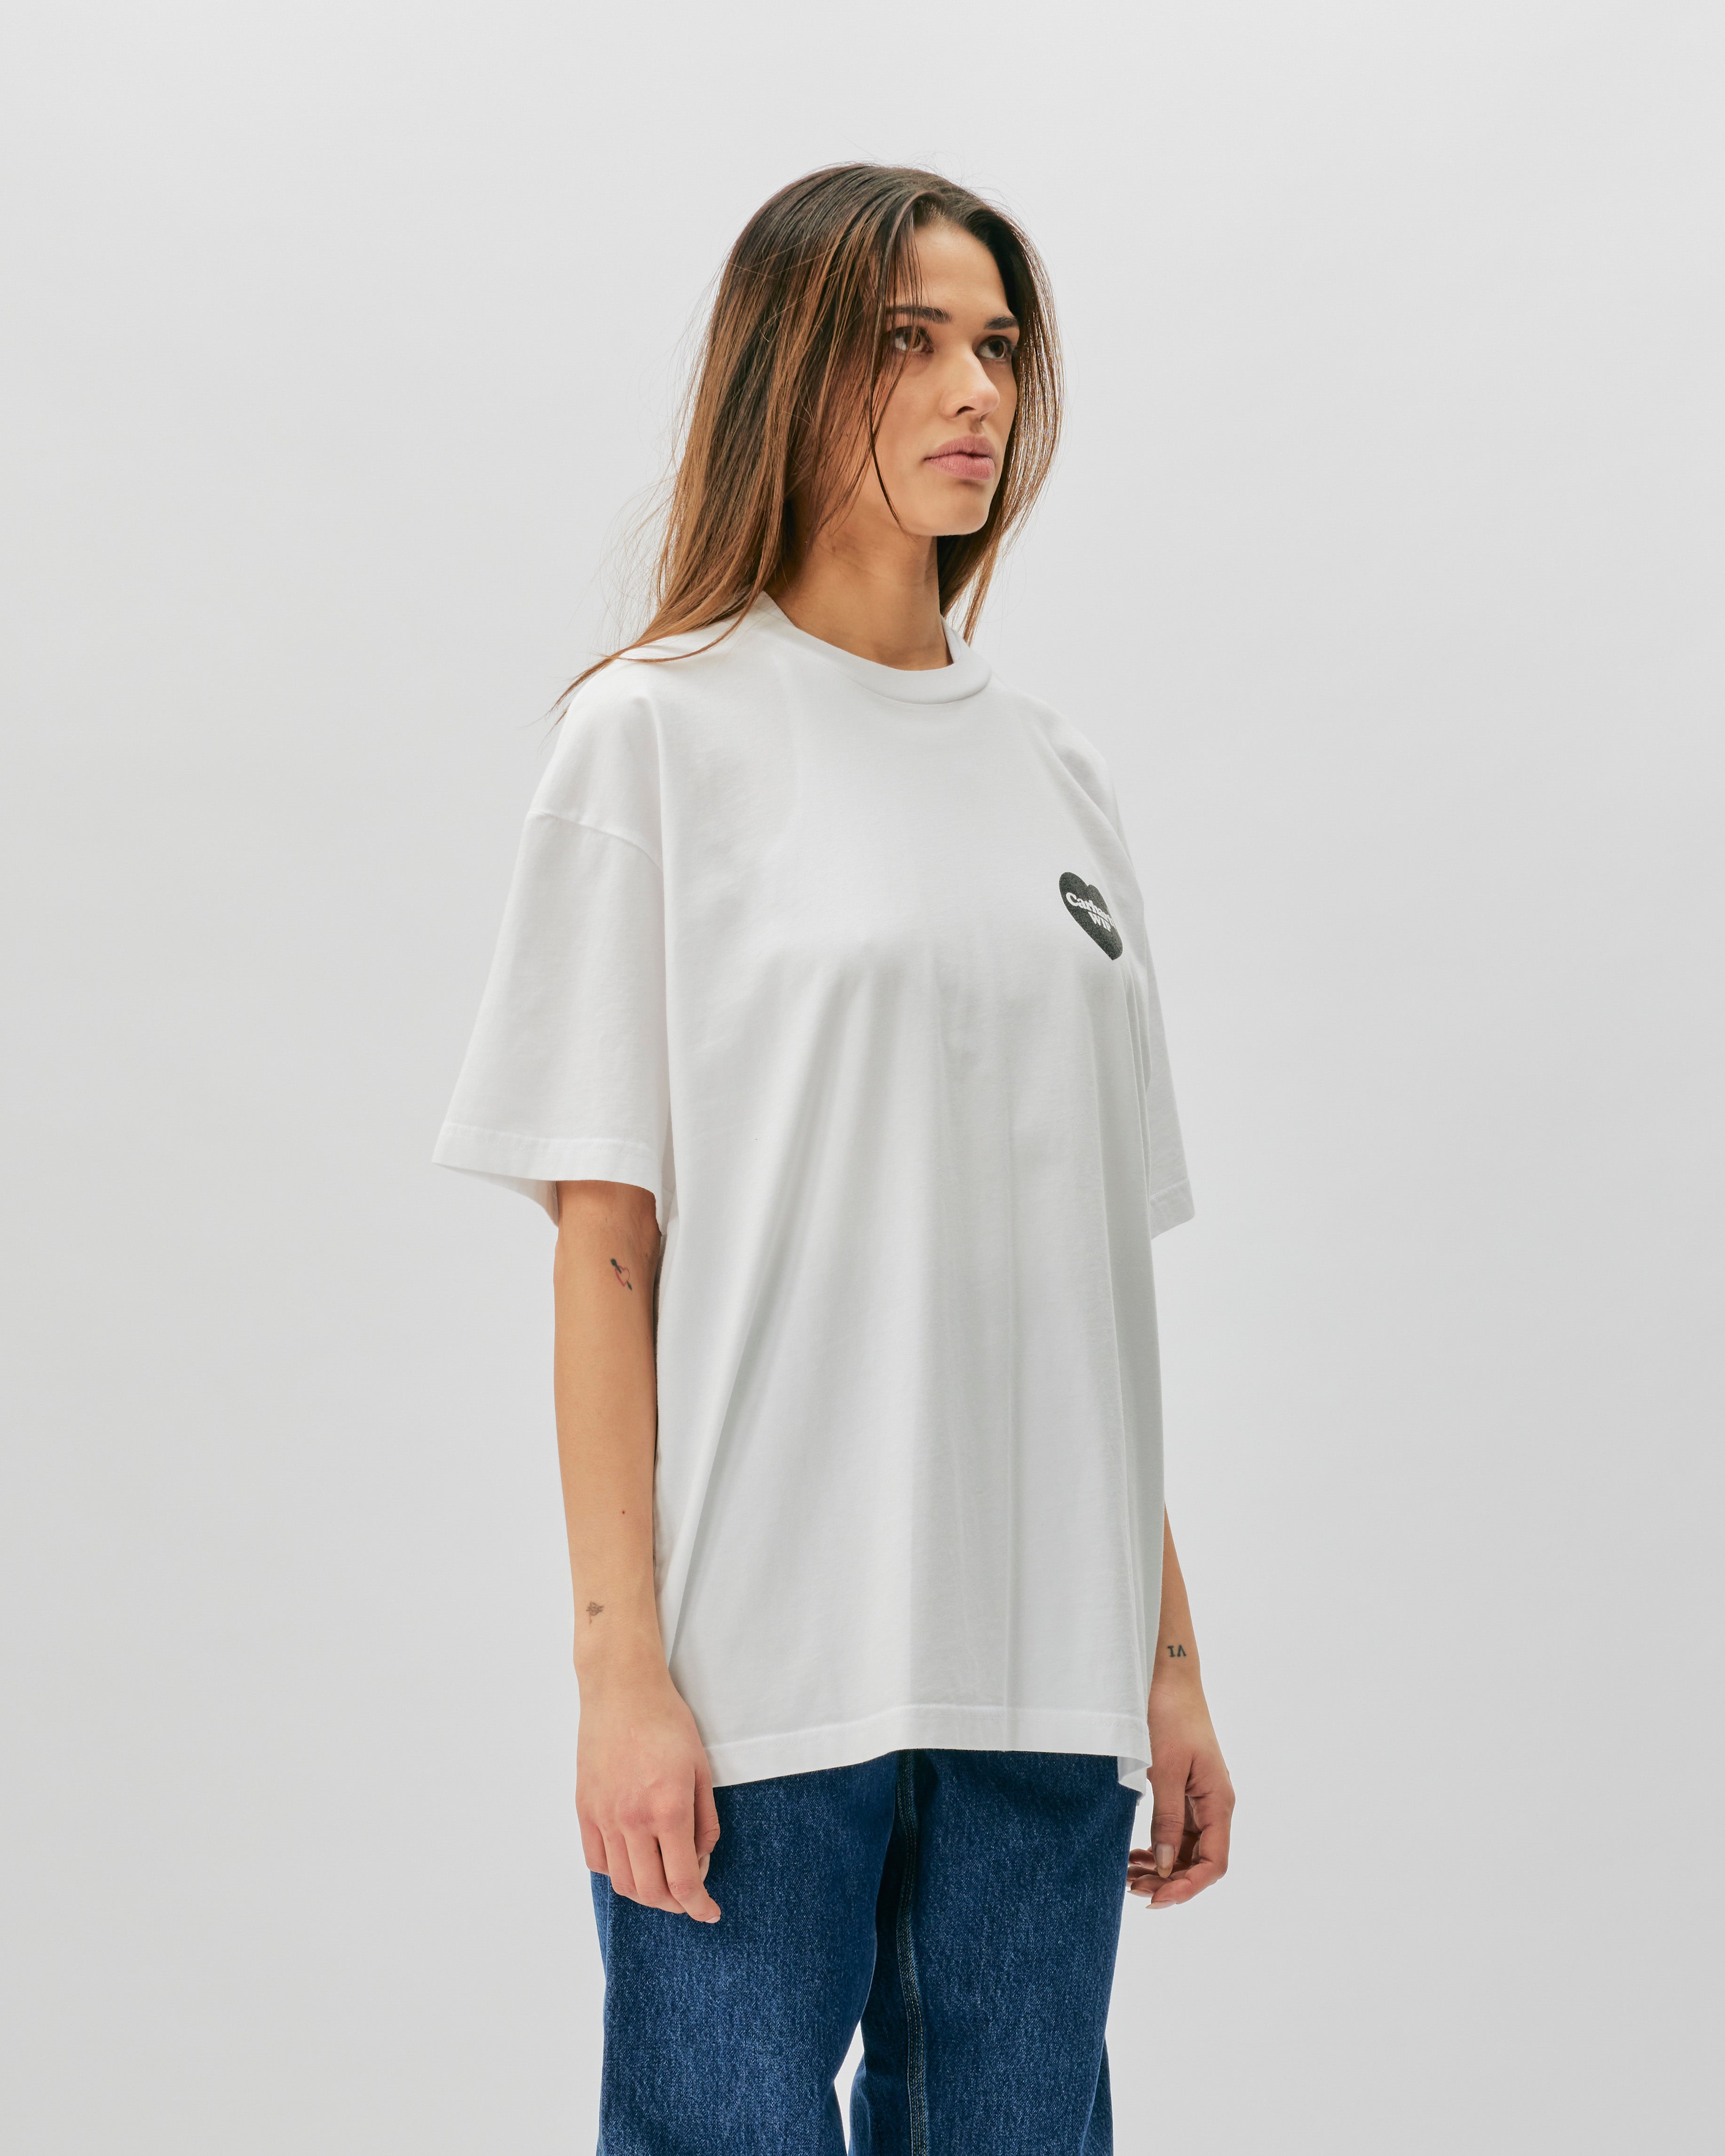 Carhartt WIP Heart Bandana T-Shirt White / Black I033116-00A06